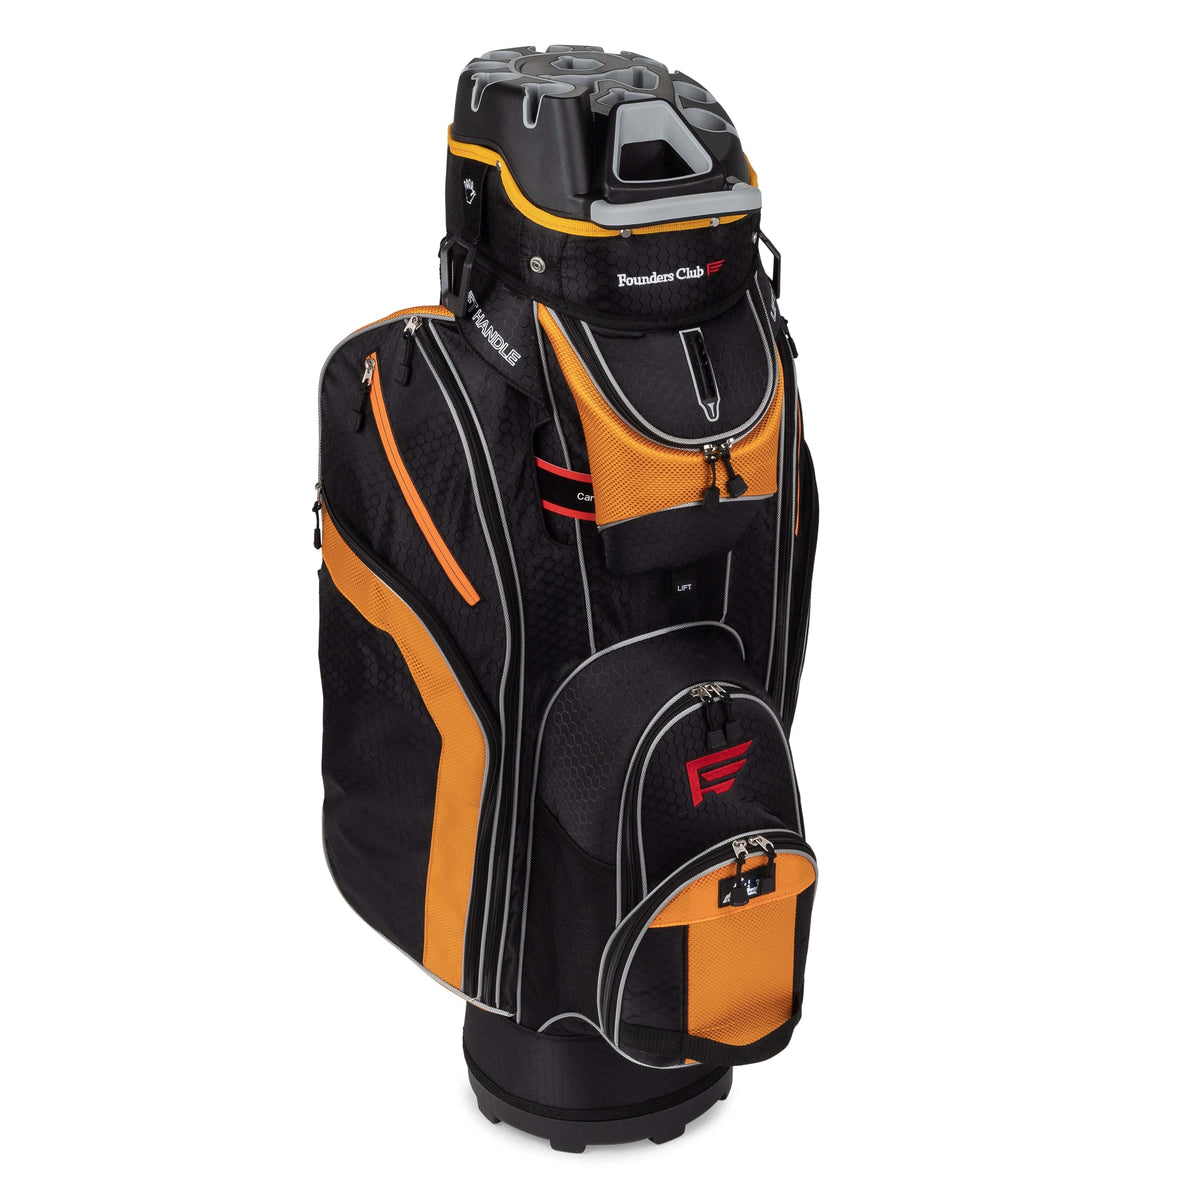 Founders Club Premium Organizer 14 Way Golf Cart Bag - Orange